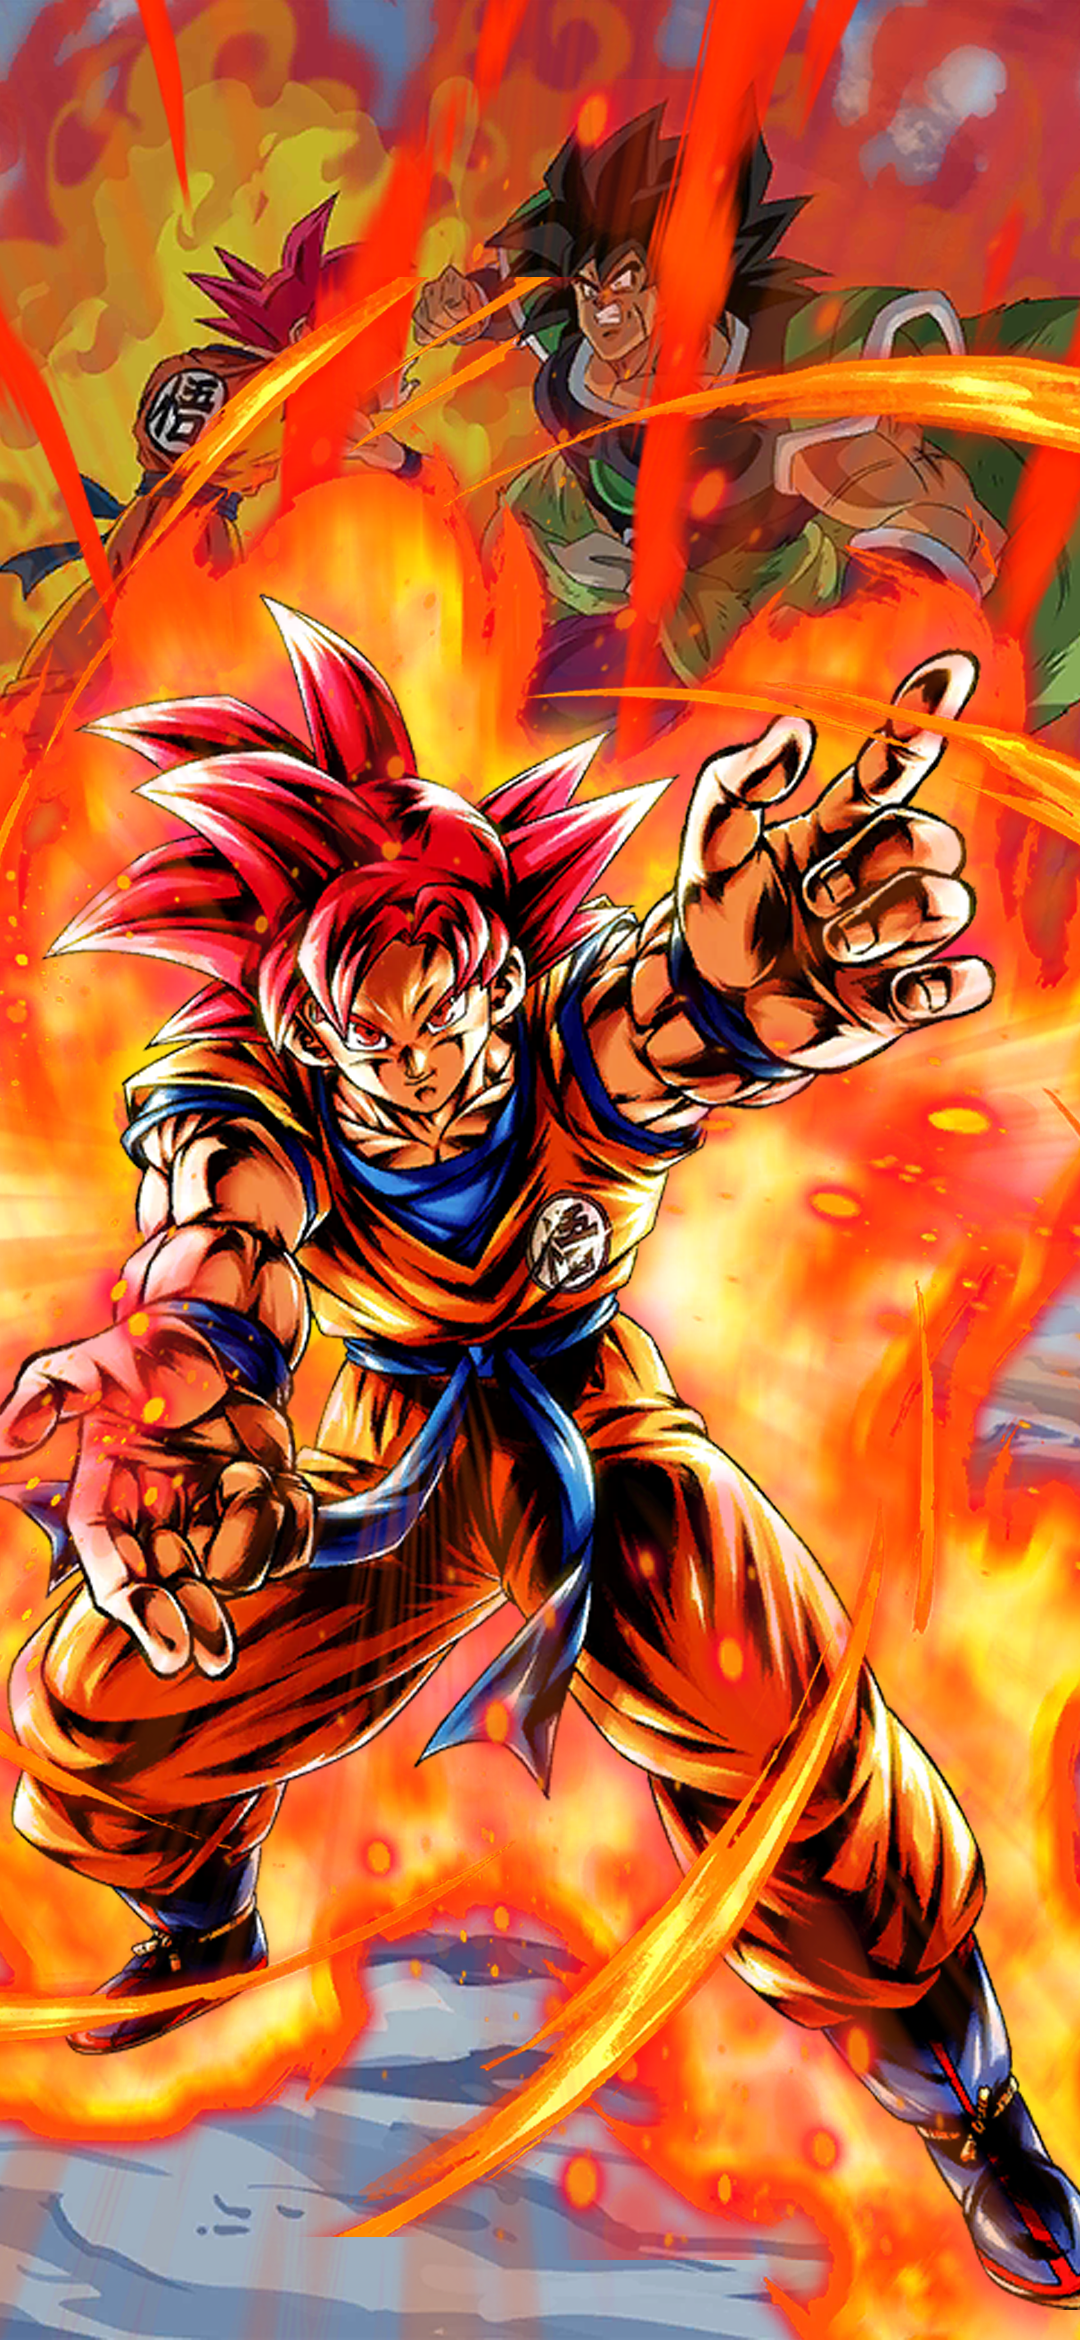 Dragon Ball Super Goku Super Saiyan God 4k HD Anime 4k Wallpapers  Images Backgrounds Photos and Pictures